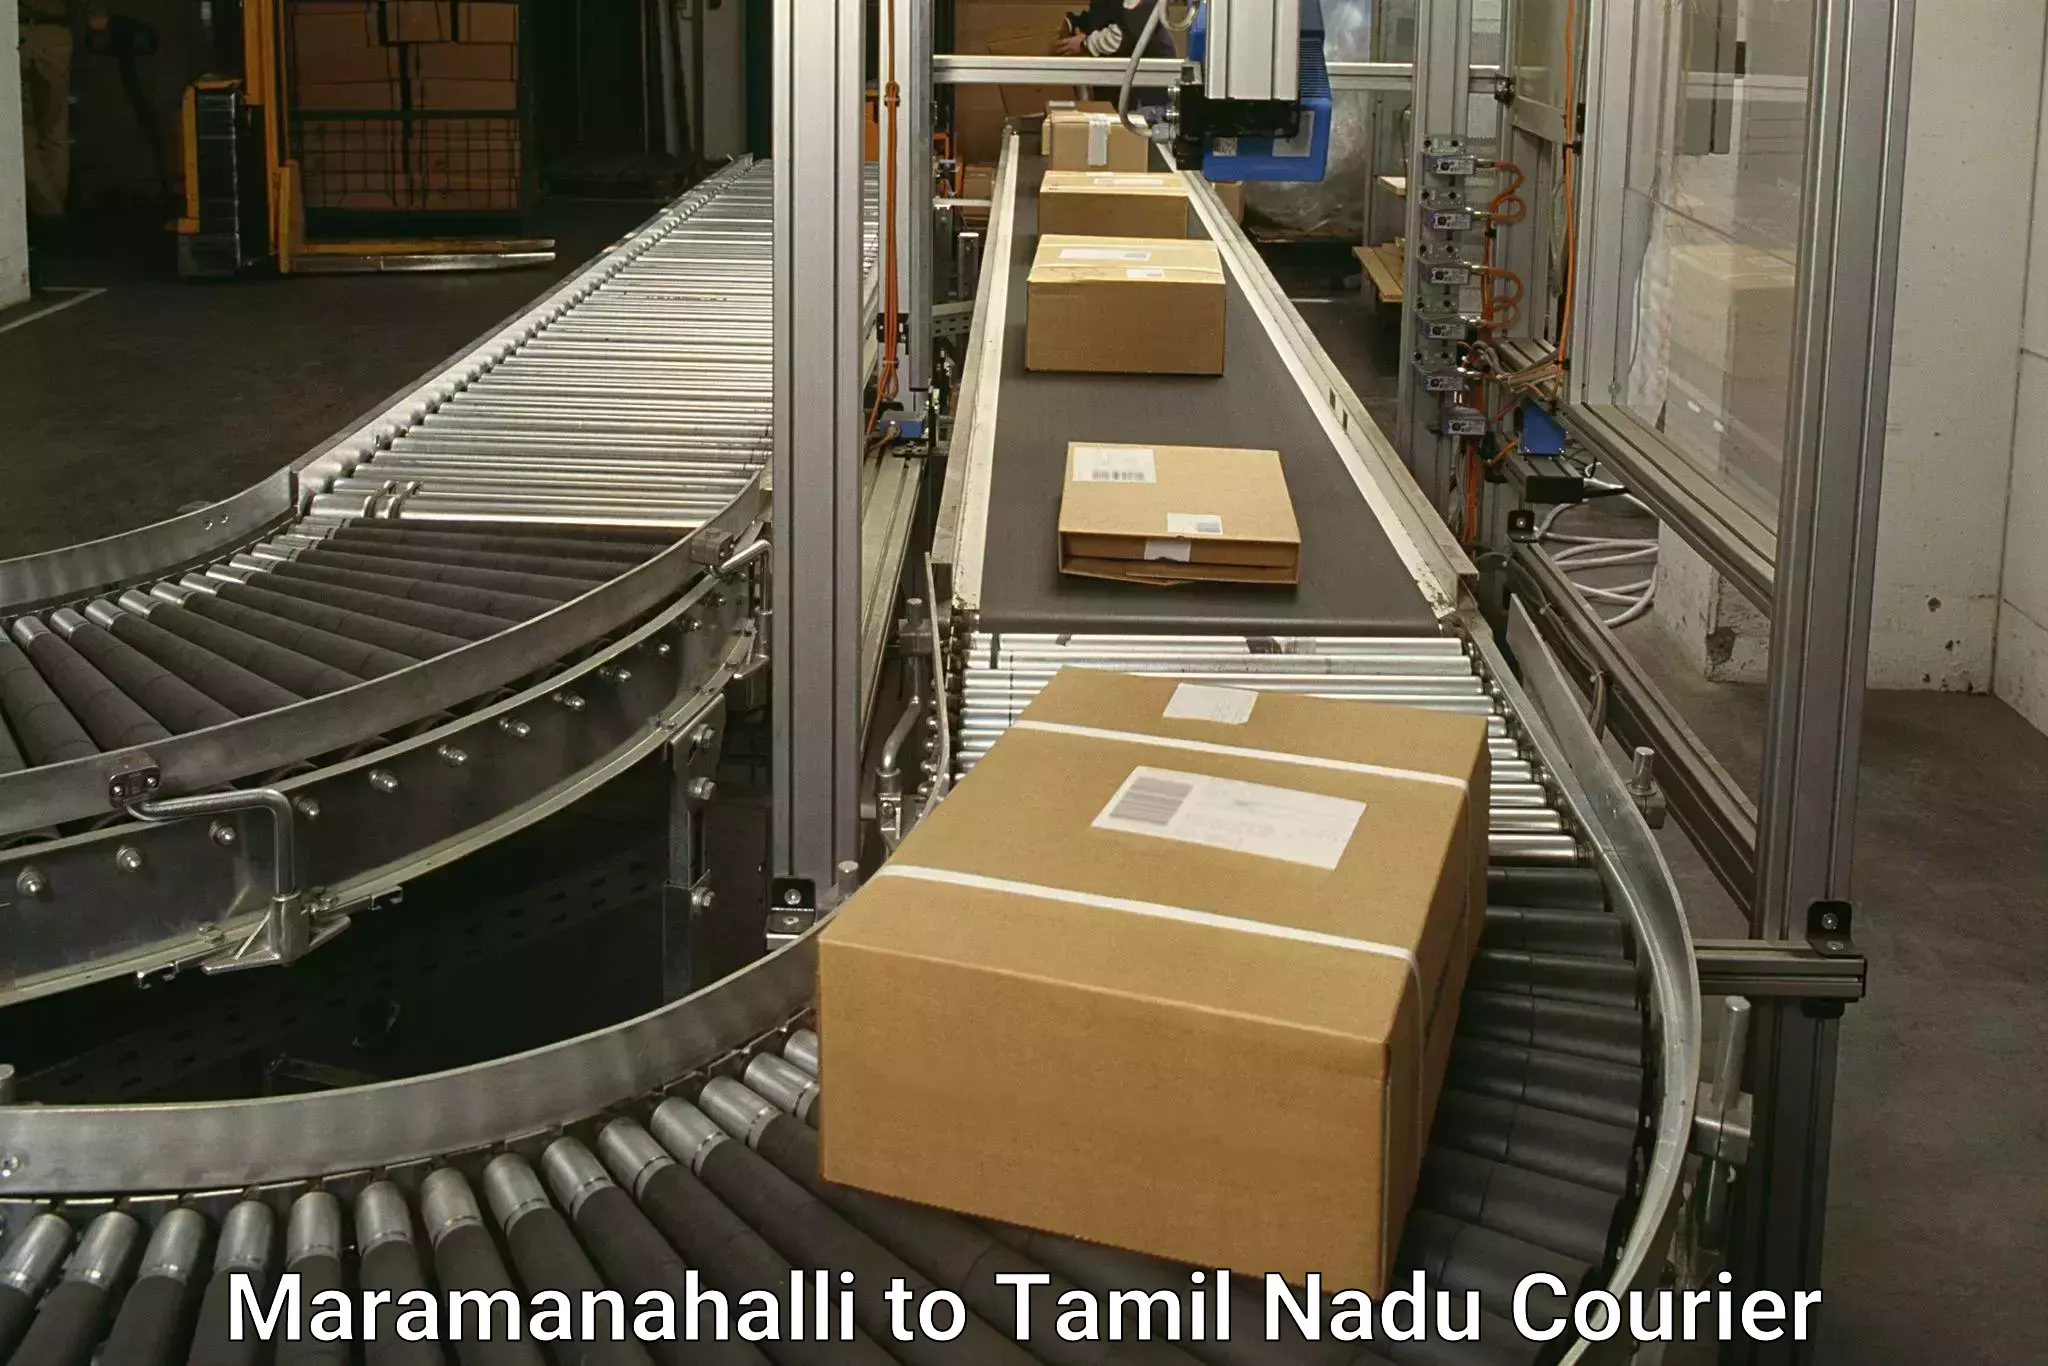 Cargo delivery service Maramanahalli to Kovilpatti